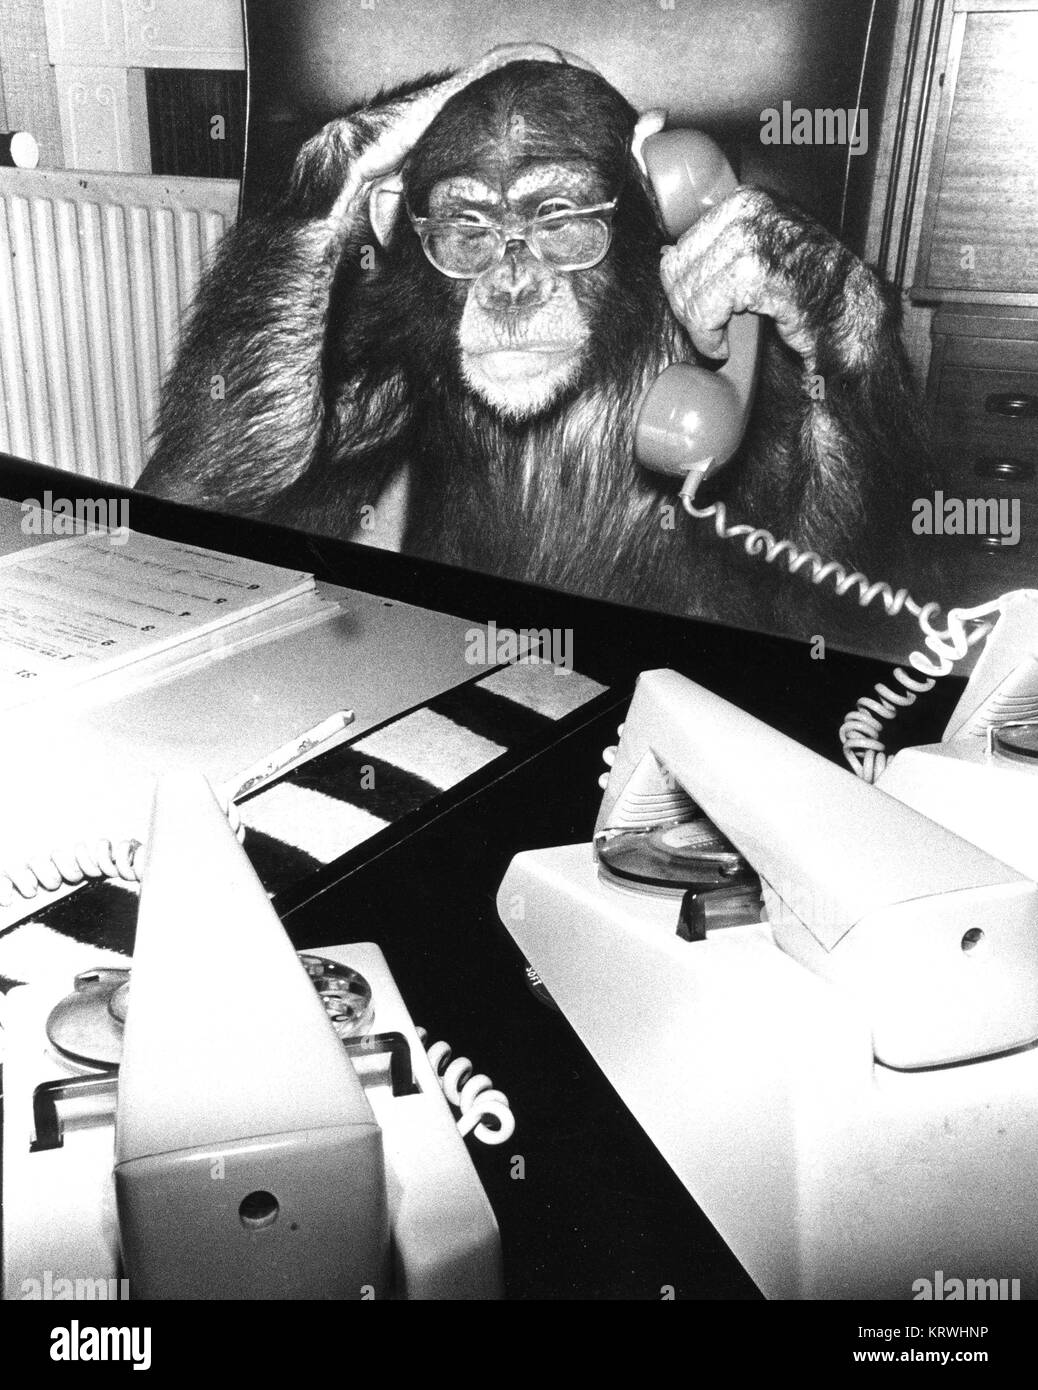 Chimpanzee on the phone, England, Great Britain Stock Photo